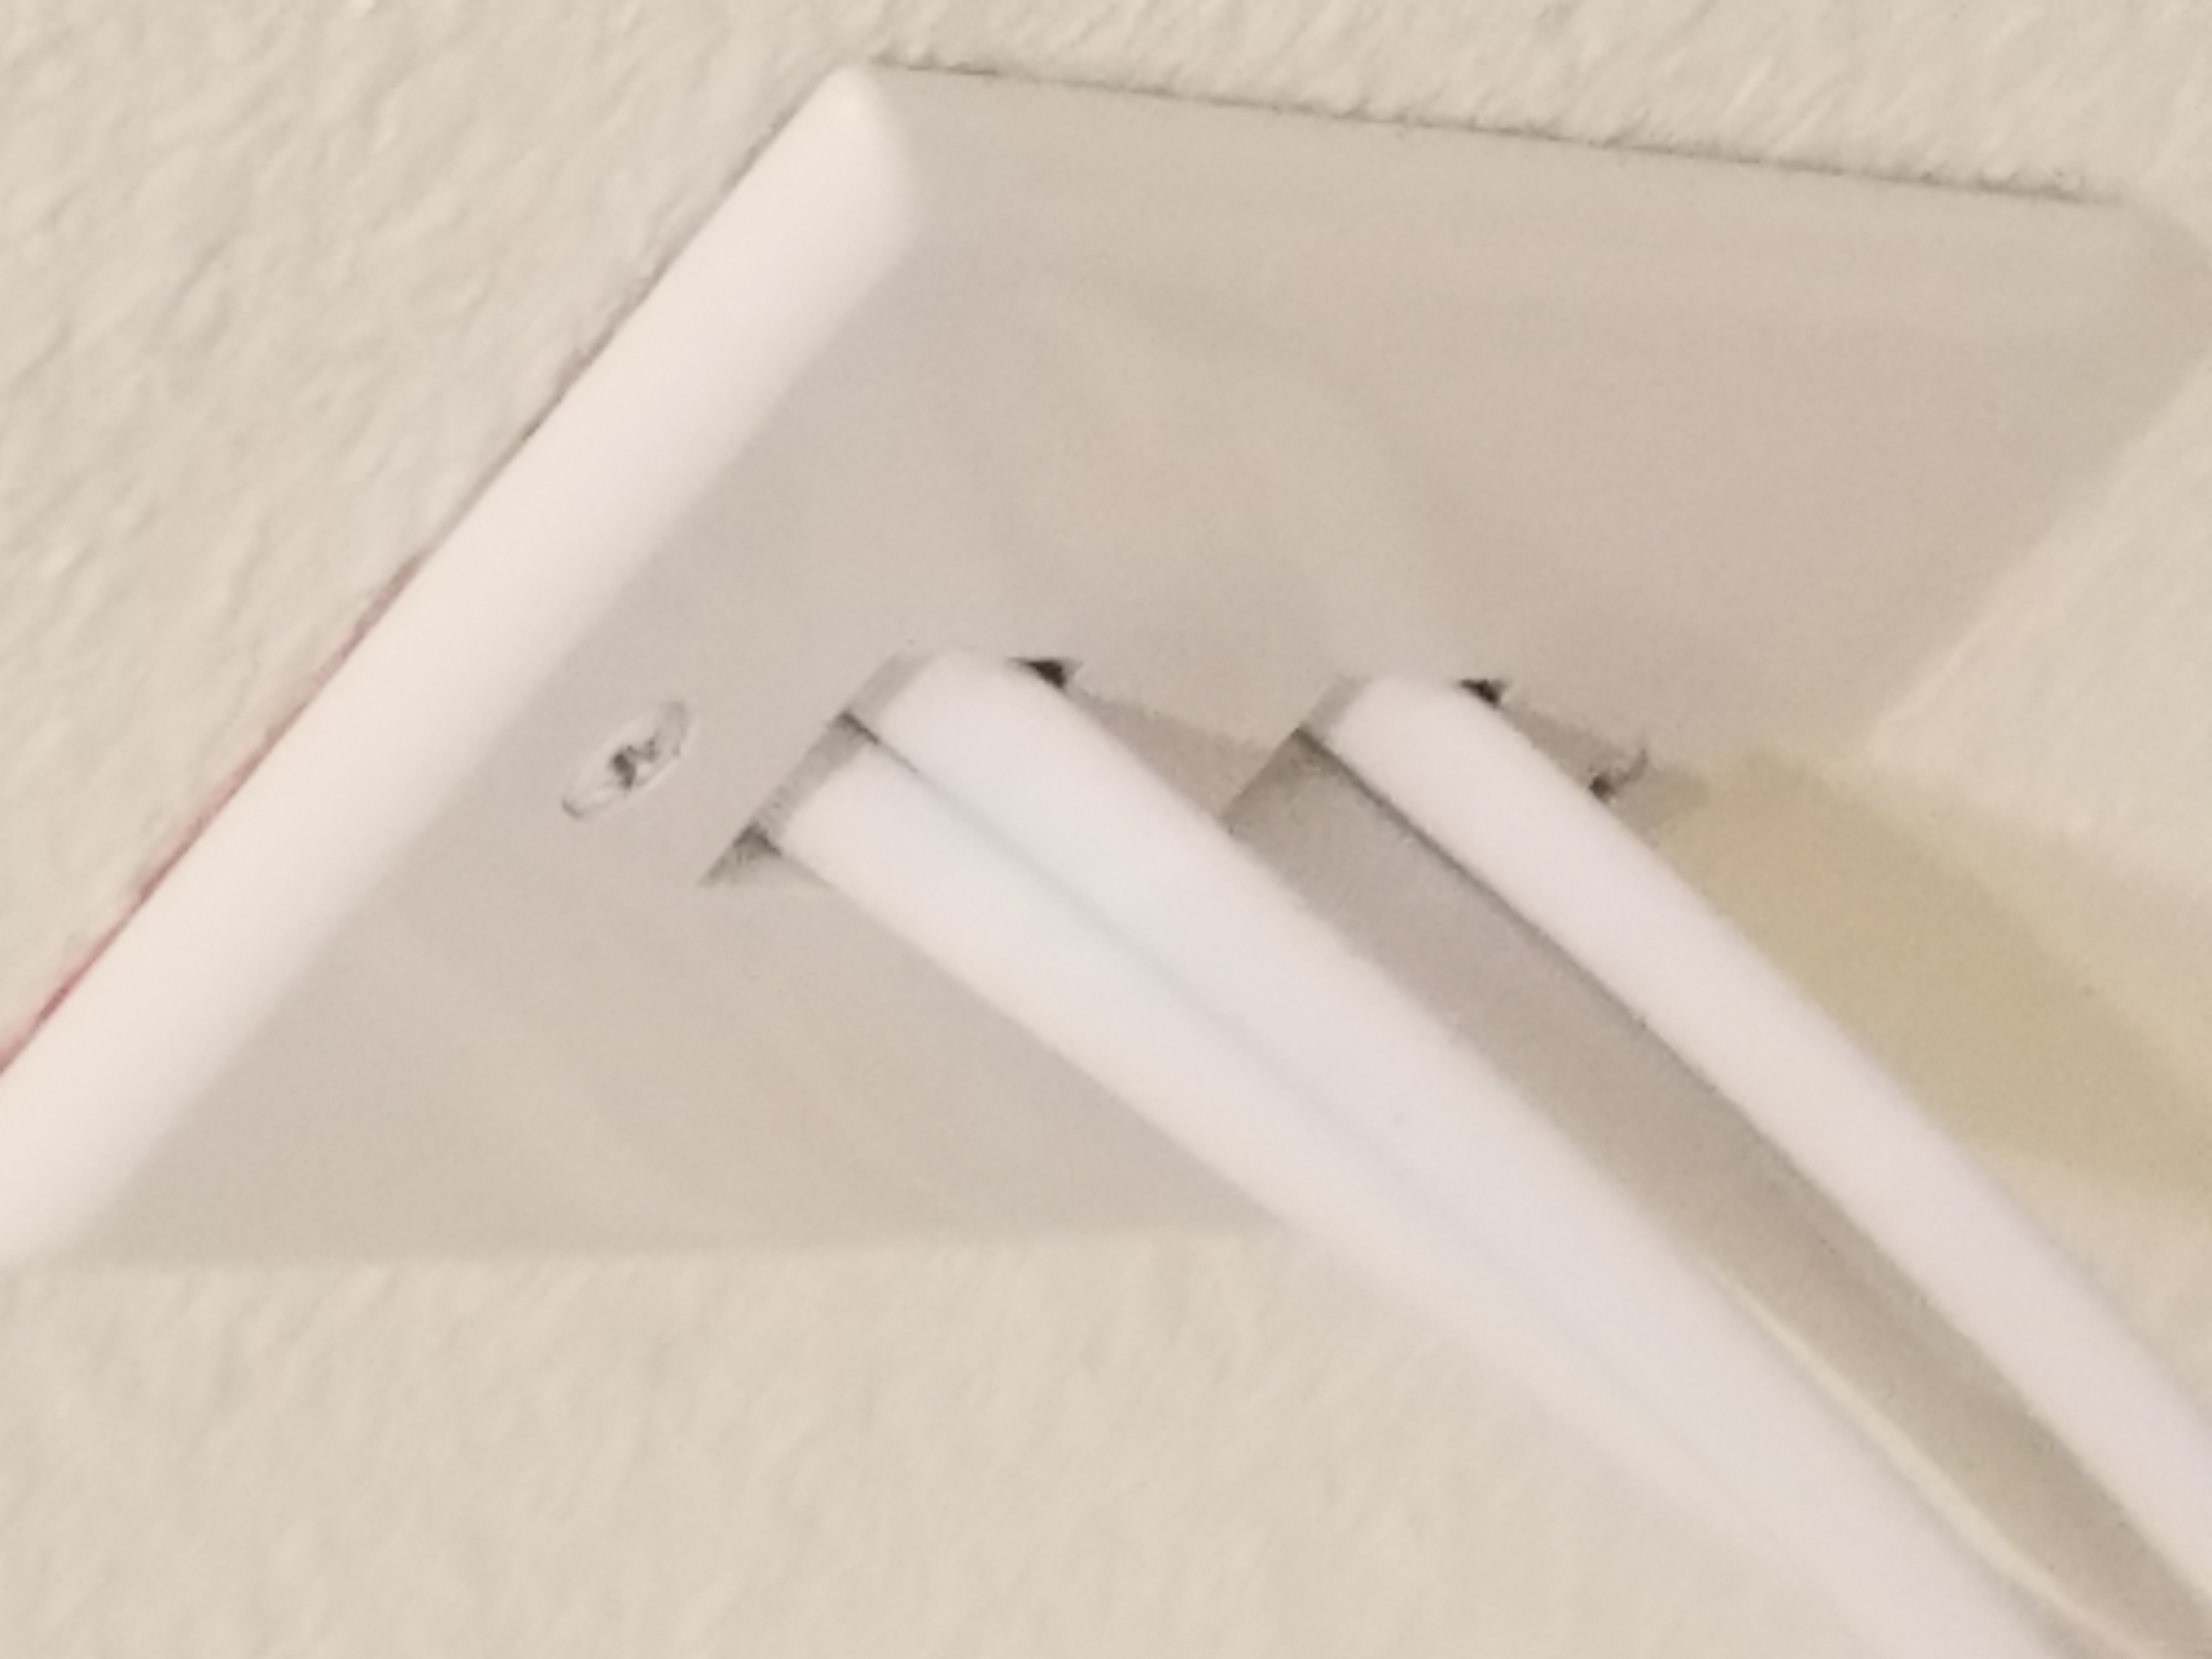 Did not use proper wall socket